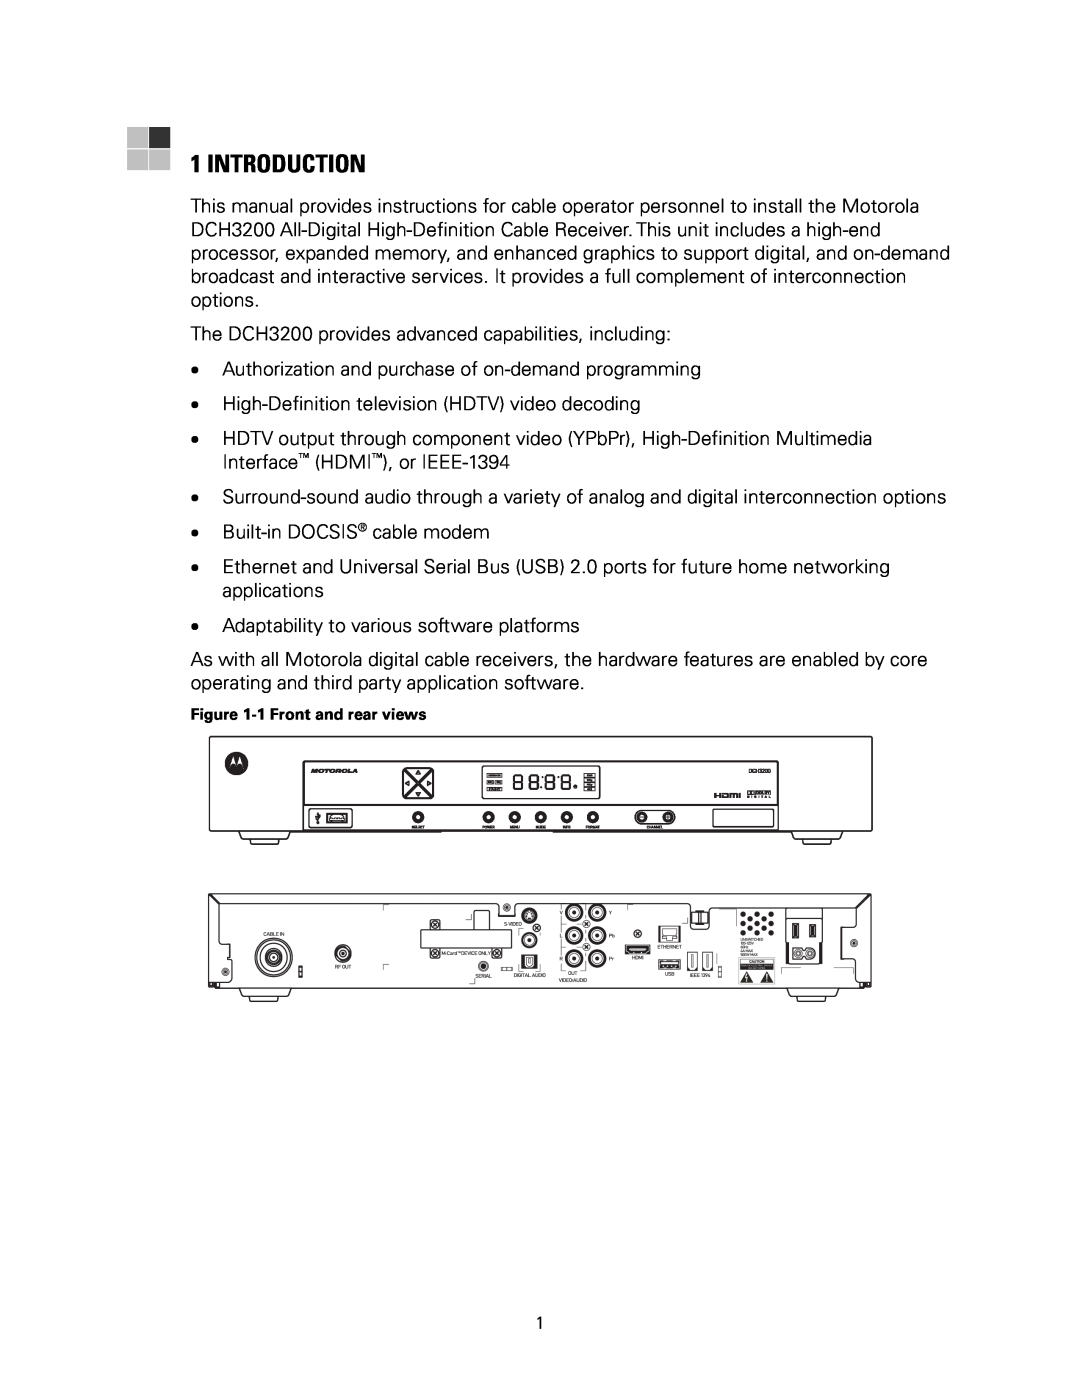 Motorola DCH3200 installation manual Introduction 